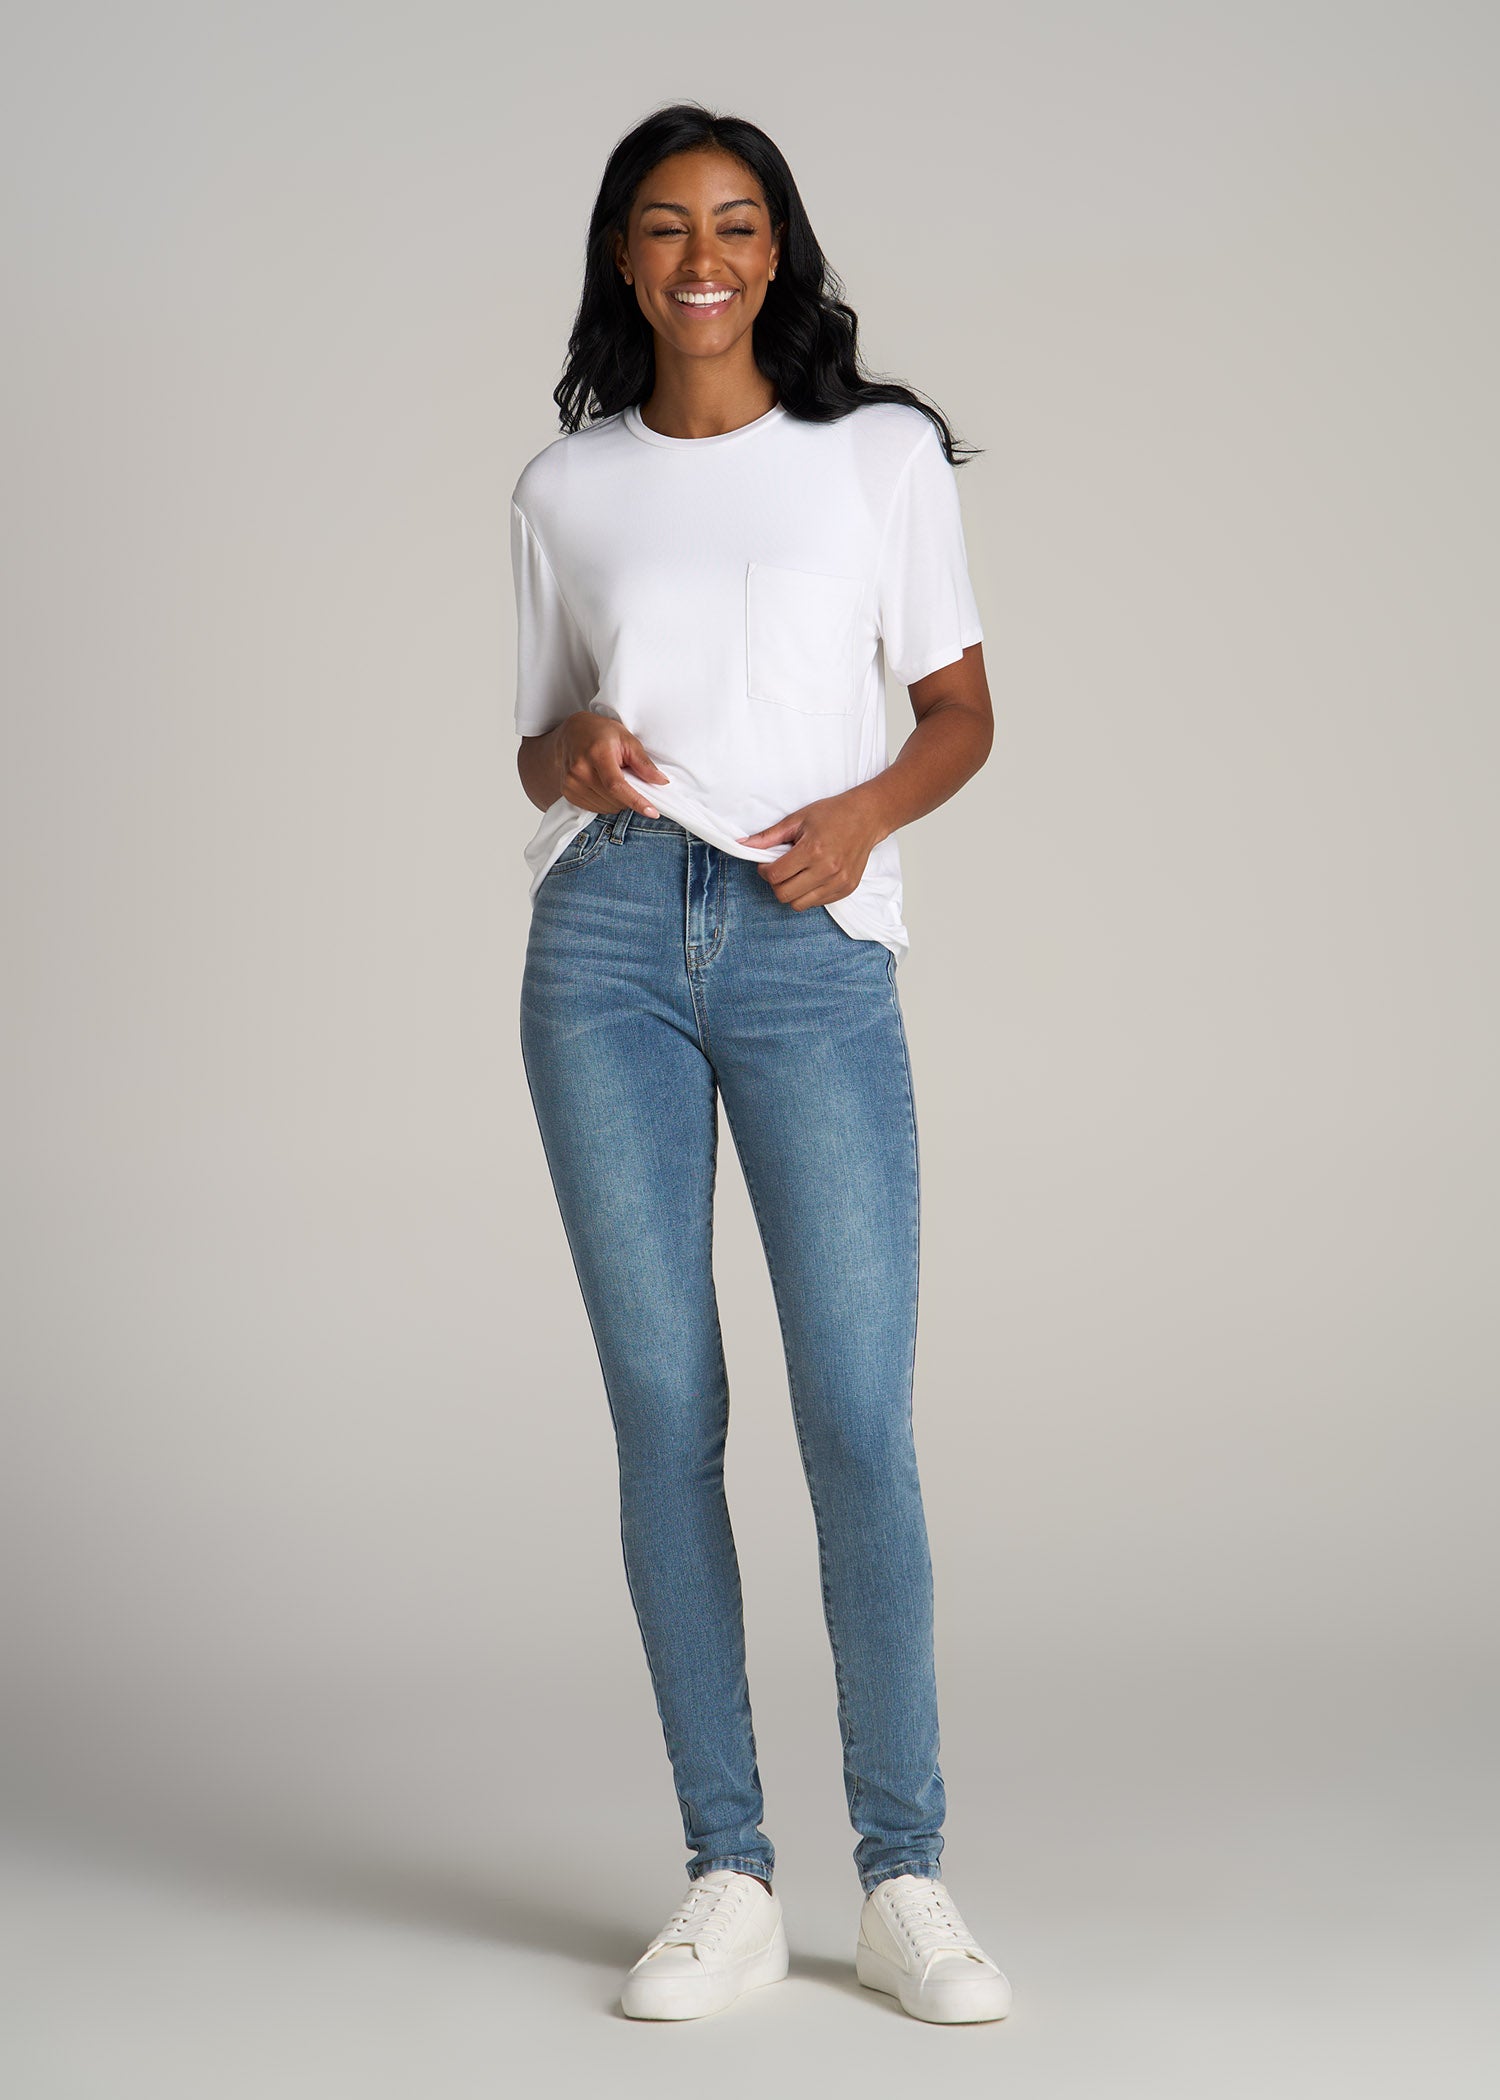 Women's Ultra High-Rise Black Super Skinny Jeans, Women's